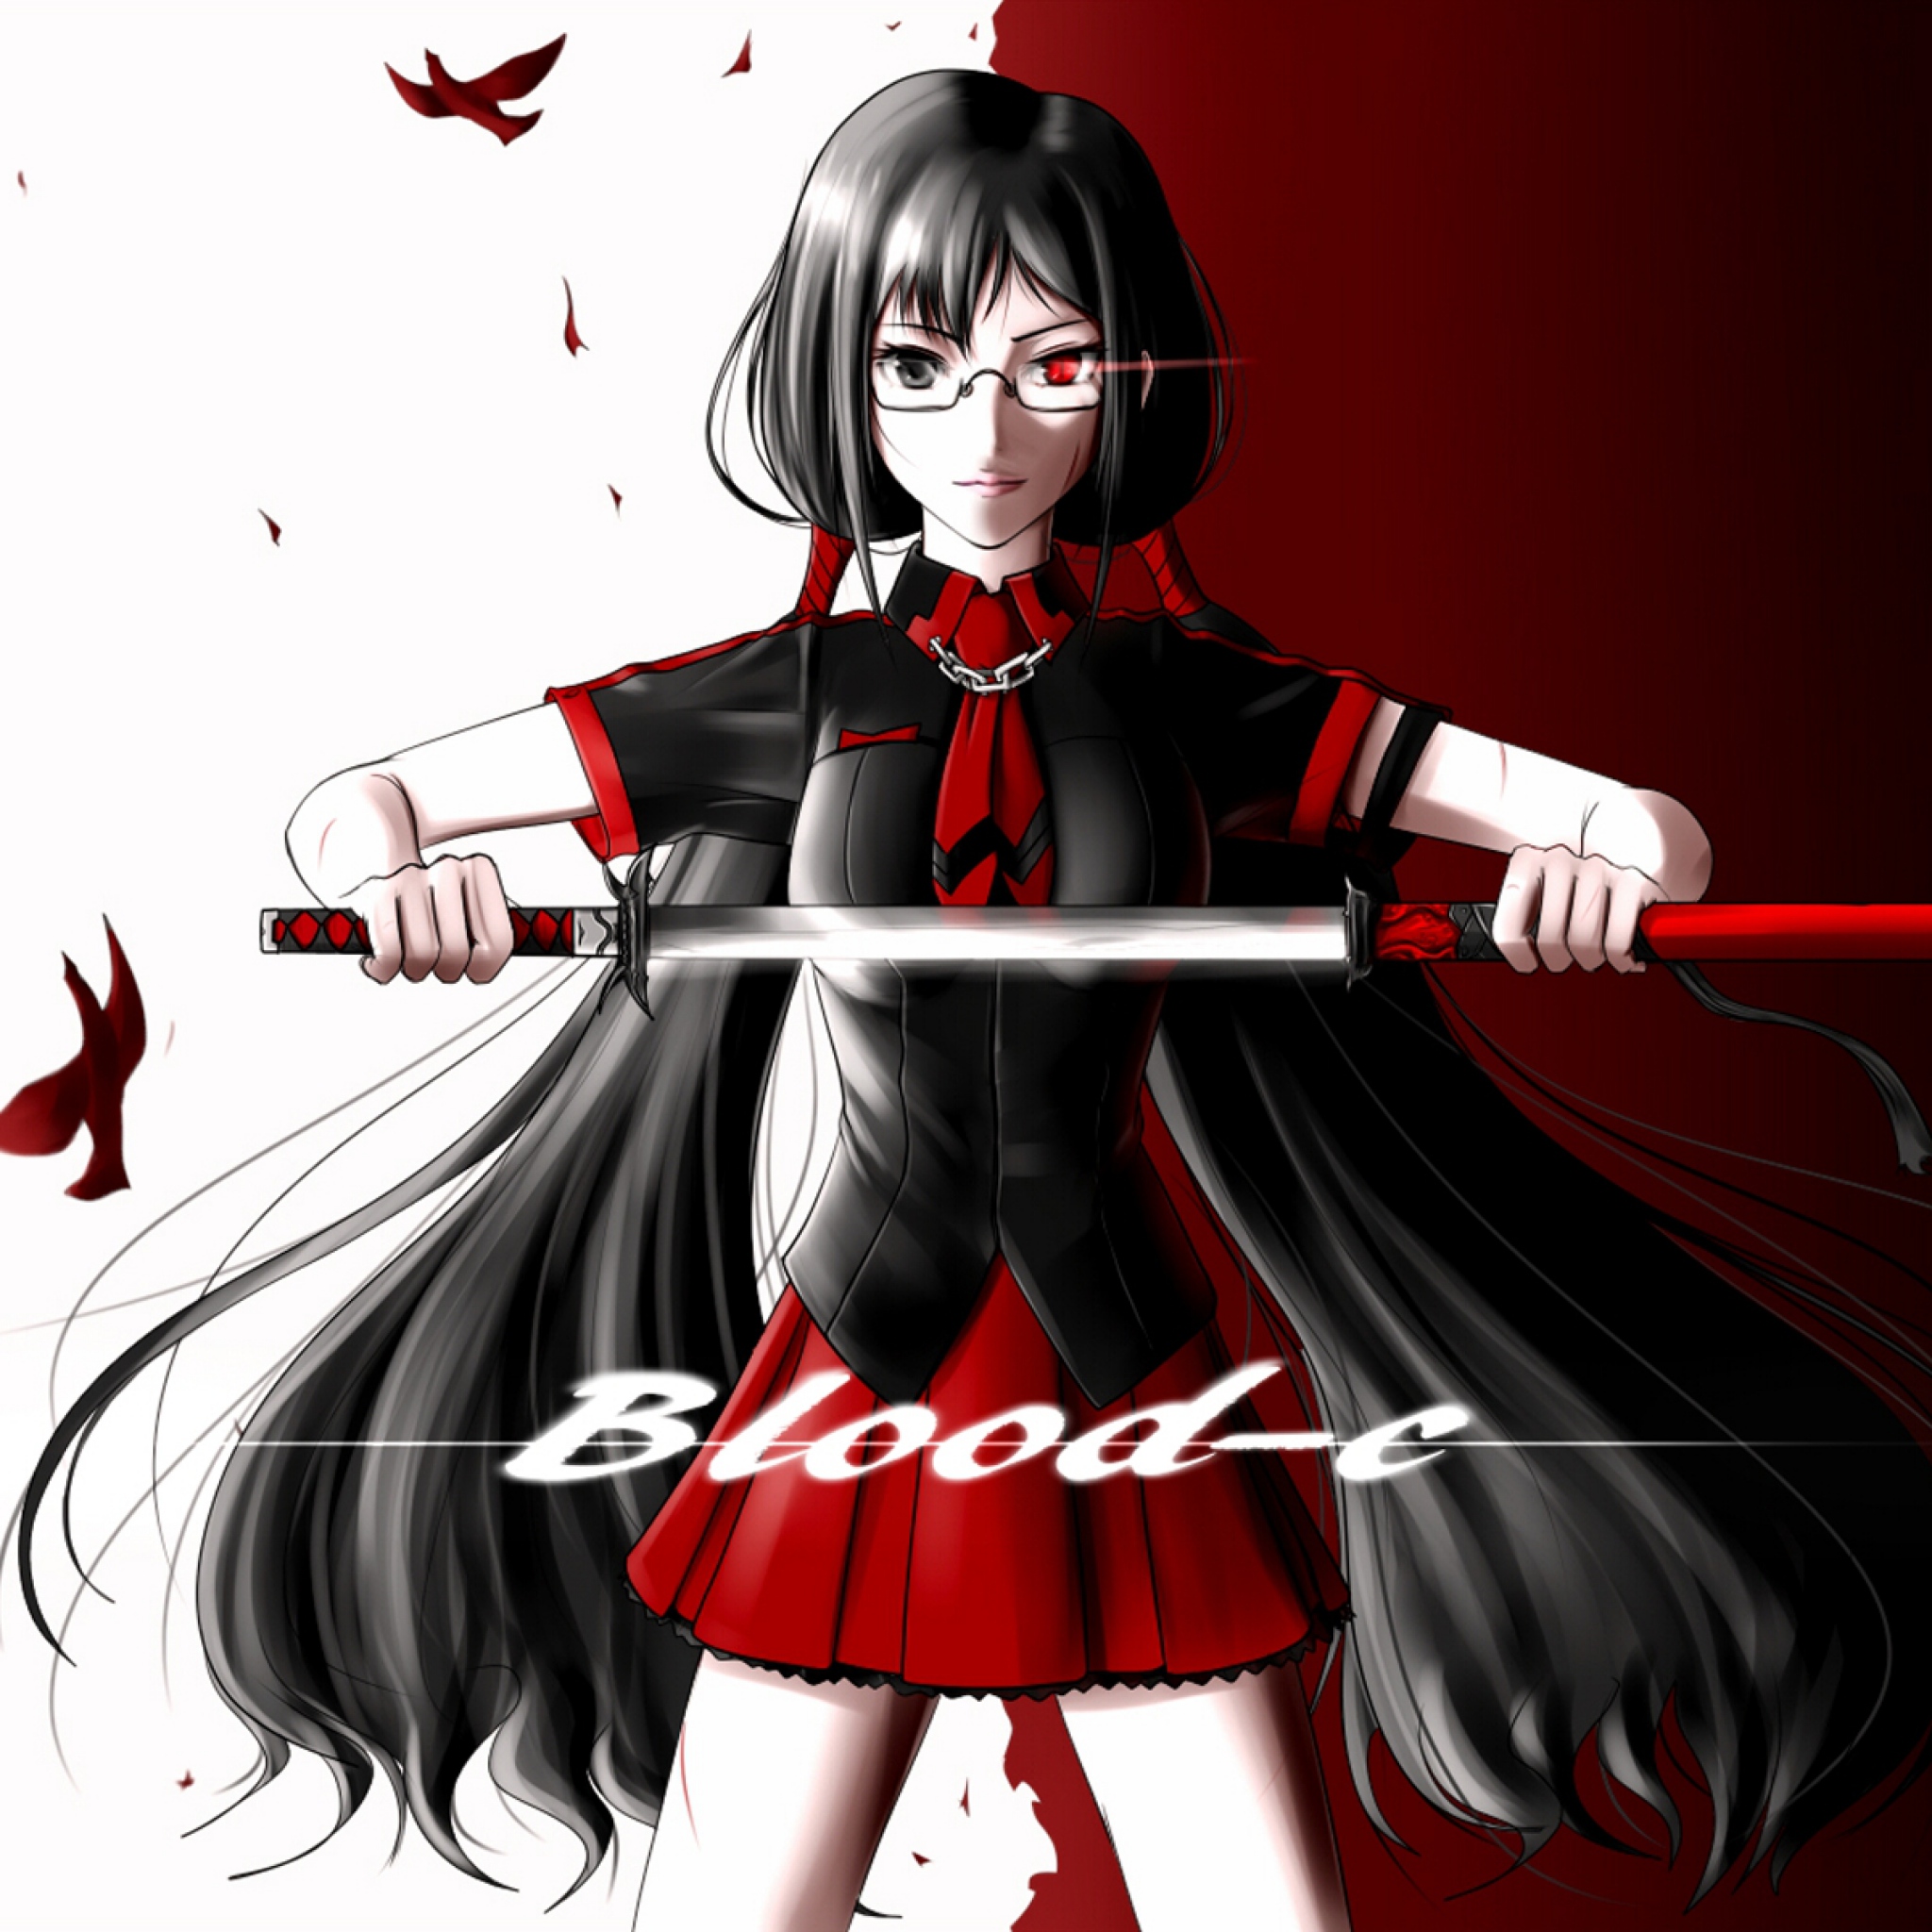 Blood-C #5